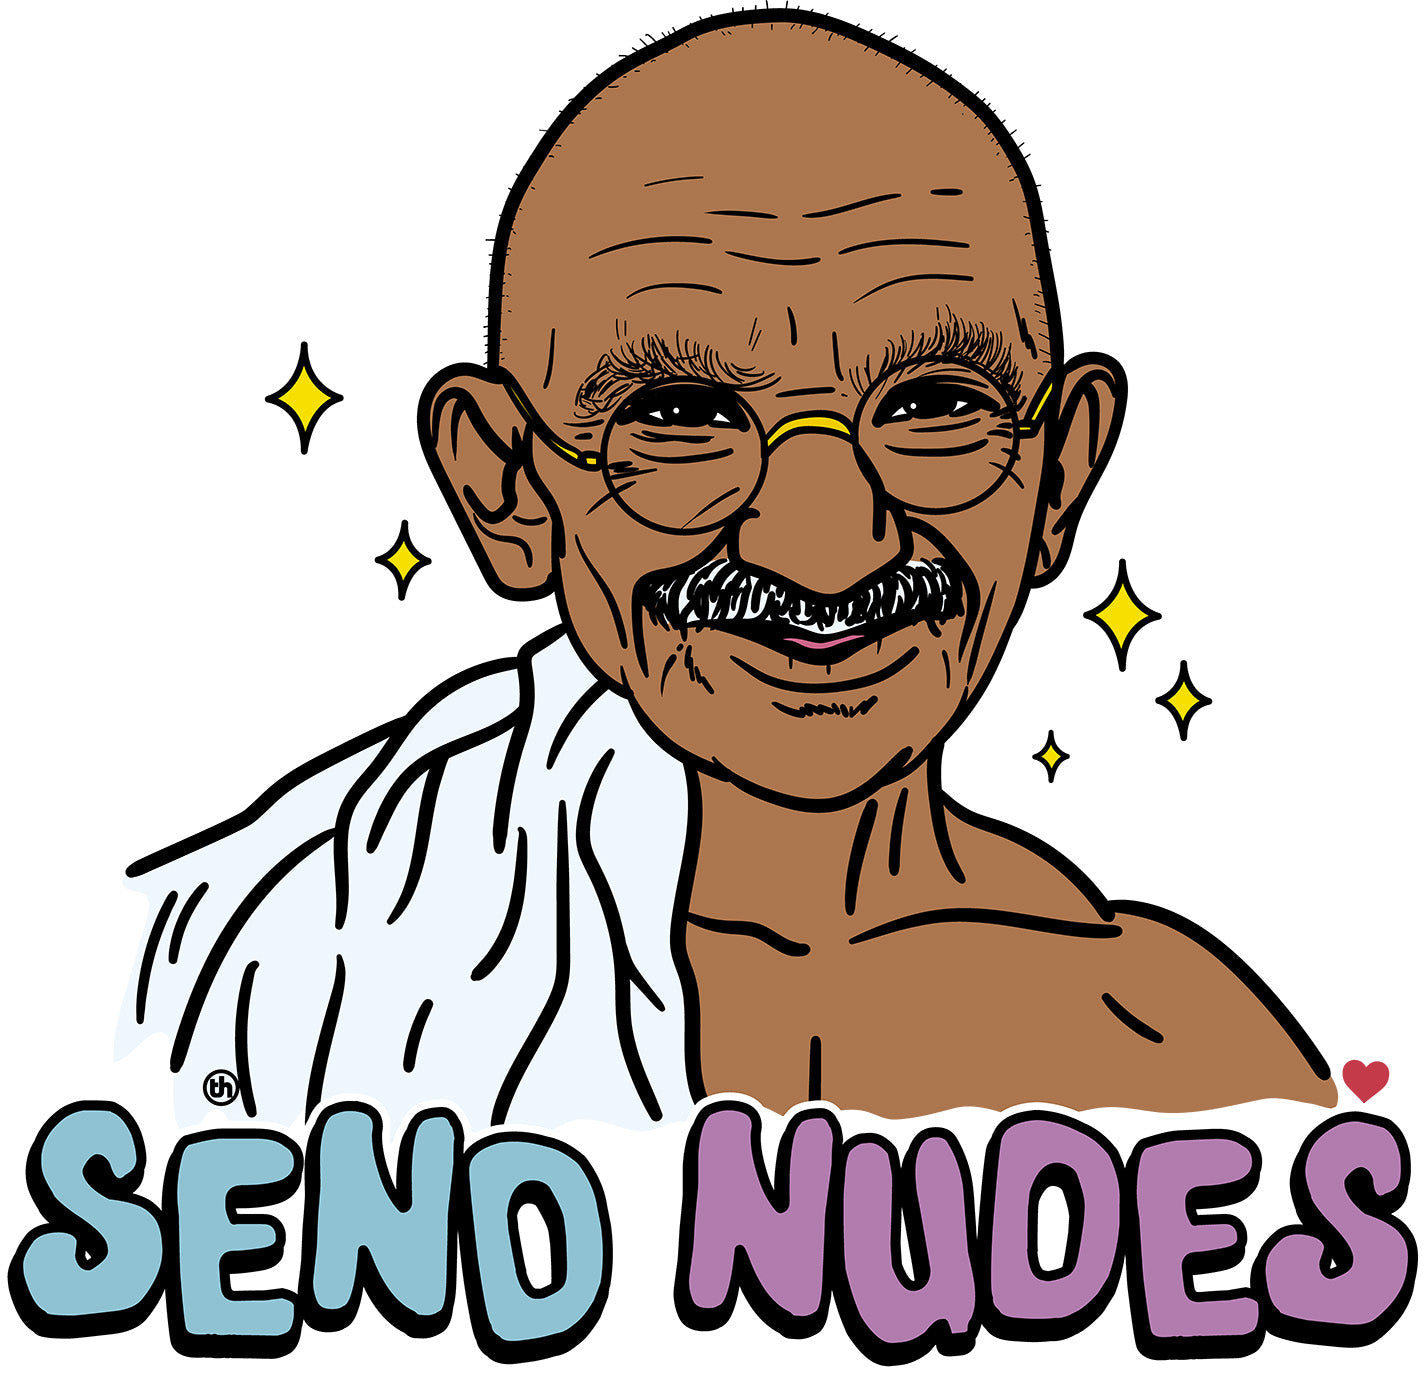 Gandhi - Send Nudes Funny Crude Social Media Slogan Saying Meme Cotton T-Shirt